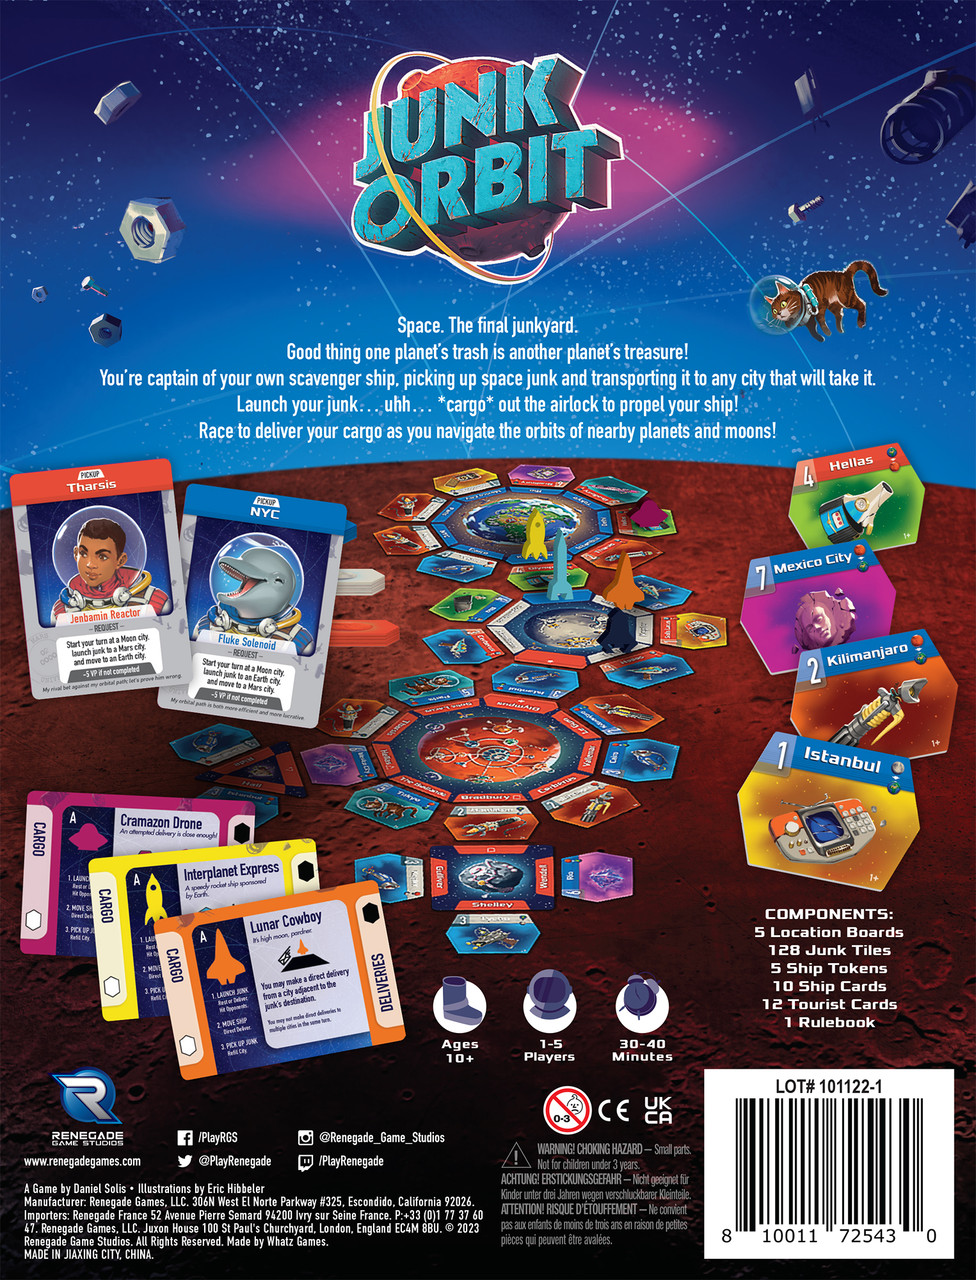 Orbital Games on X: Orbital Games and Comics is having a